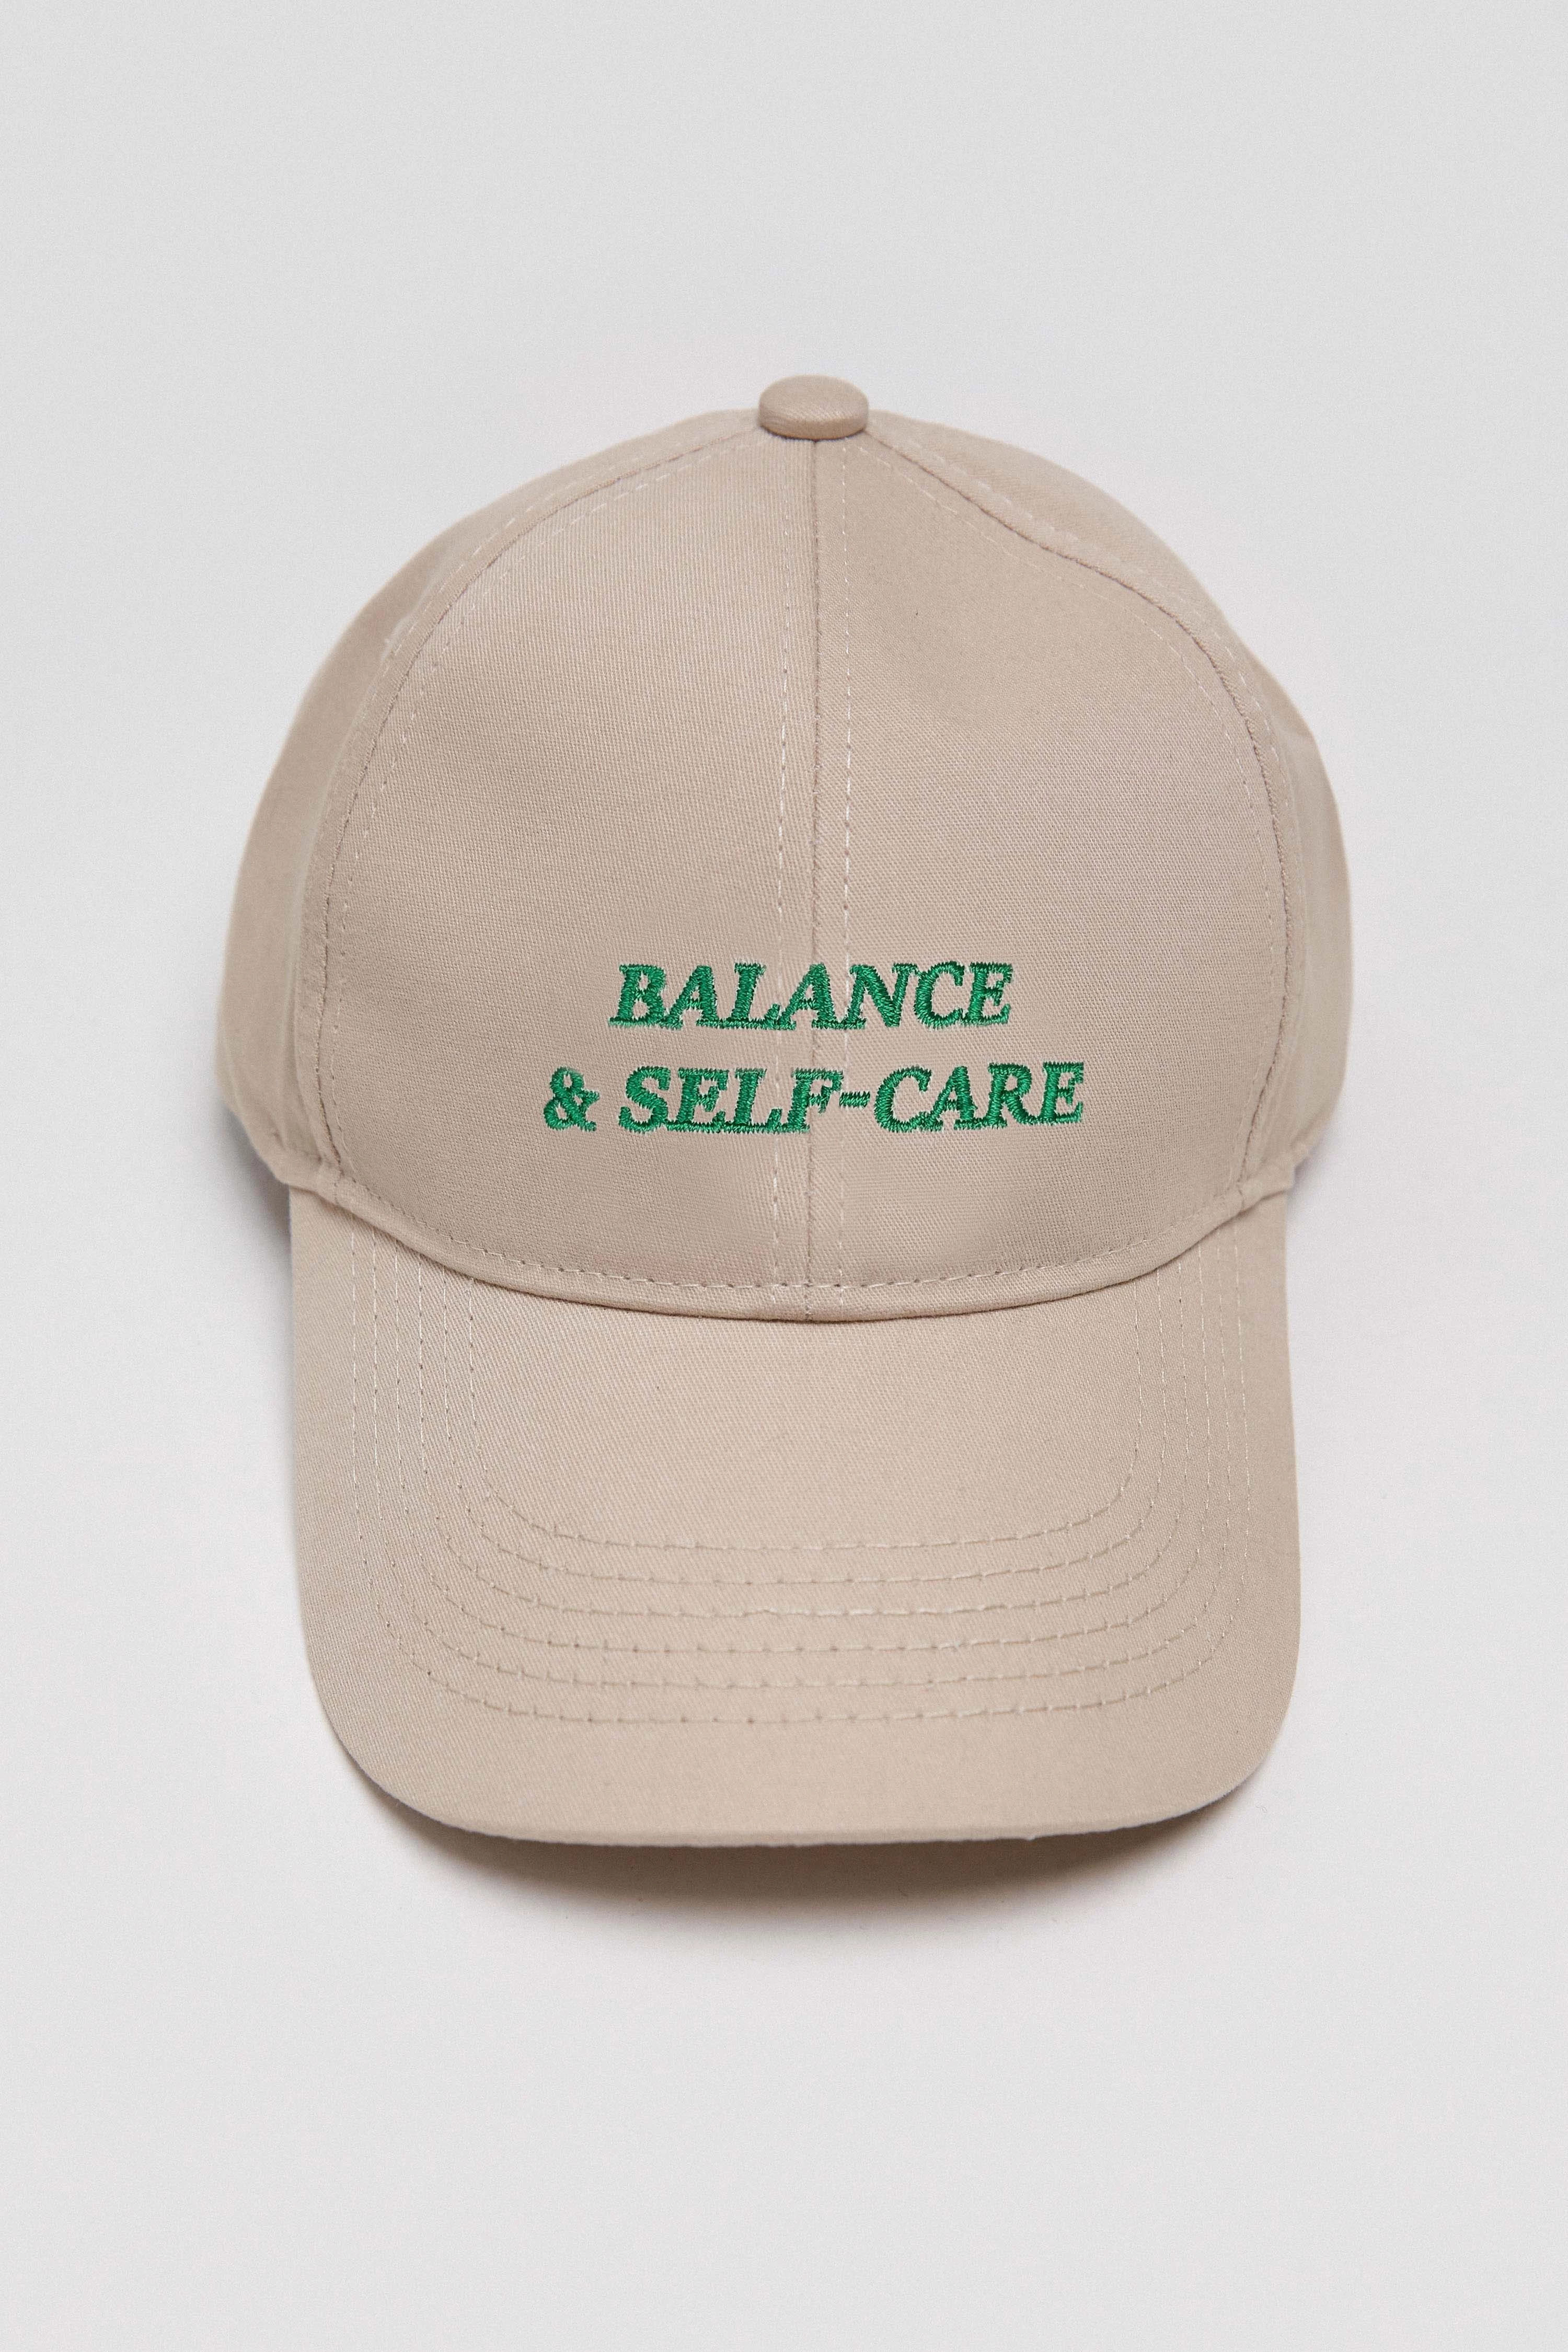 Бежева бейсболка із саржі "Balance & self-care", фото 1